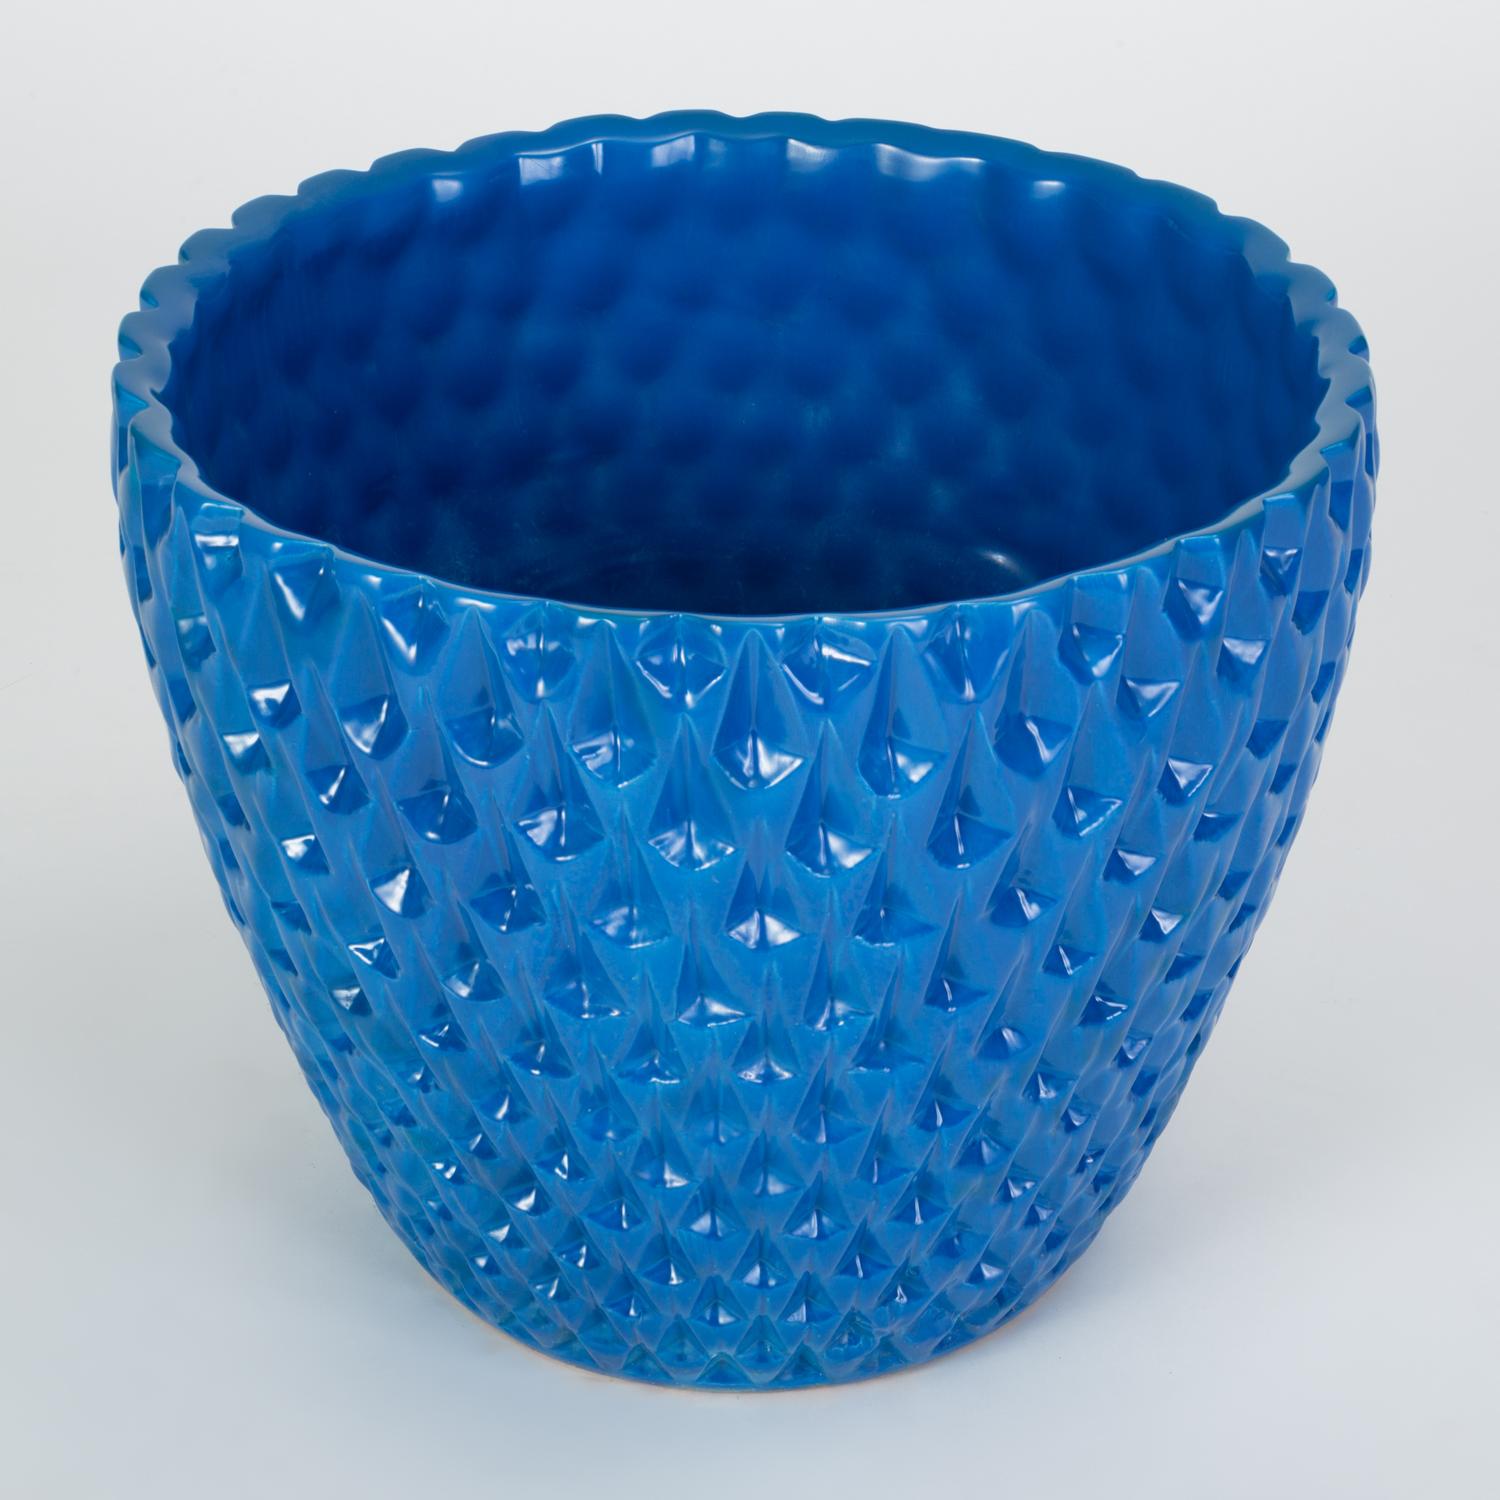 Glazed Phoenix-1 Planter in Blue Glaze by David Cressey for Architectural Pottery